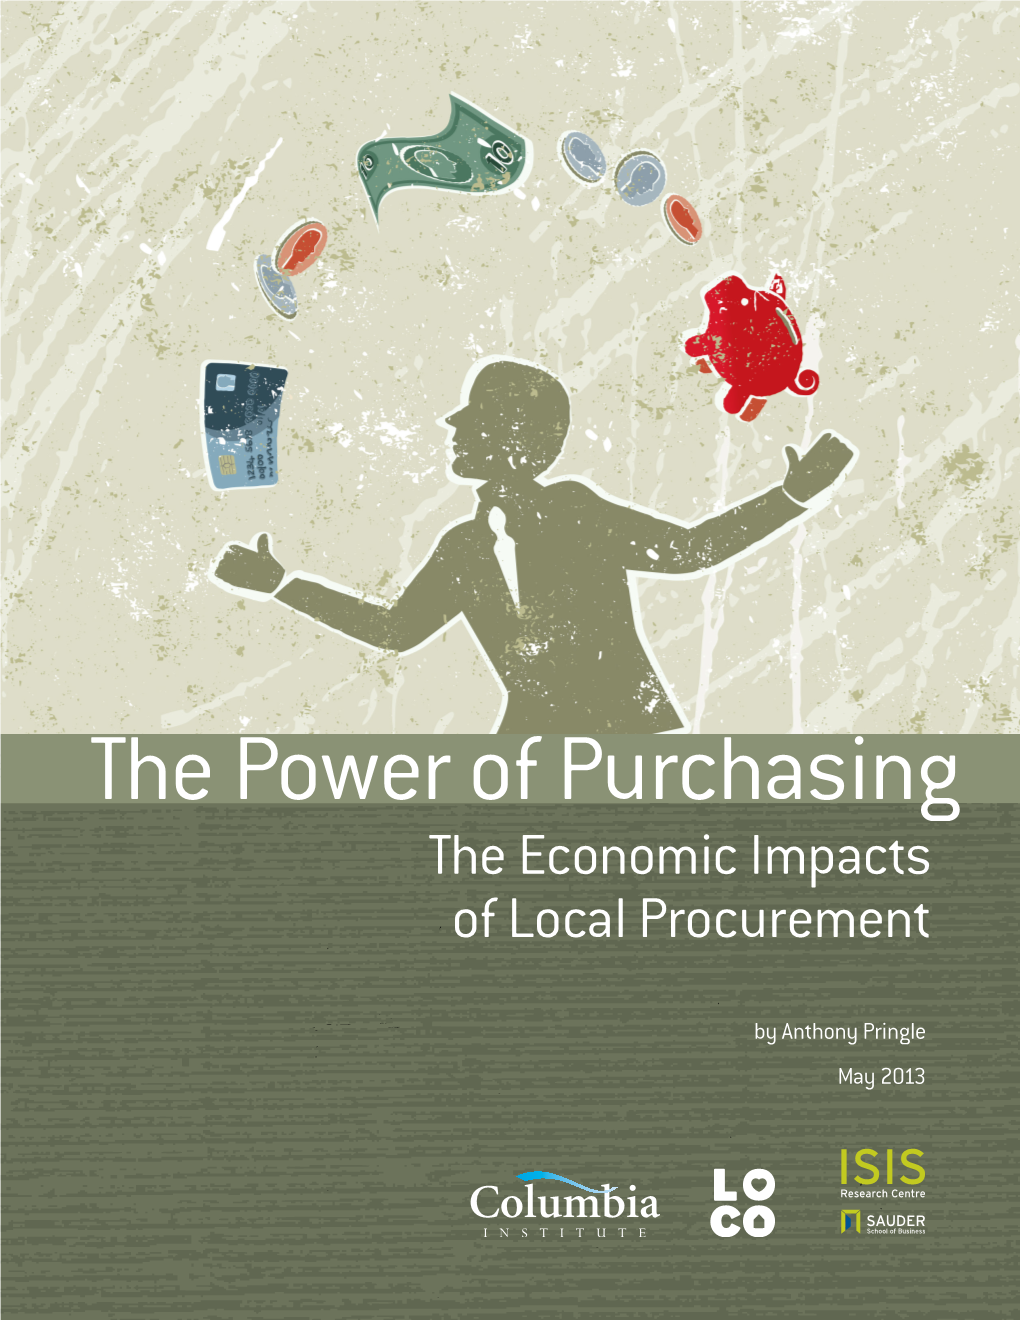 The Economic Impacts of Local Procurement